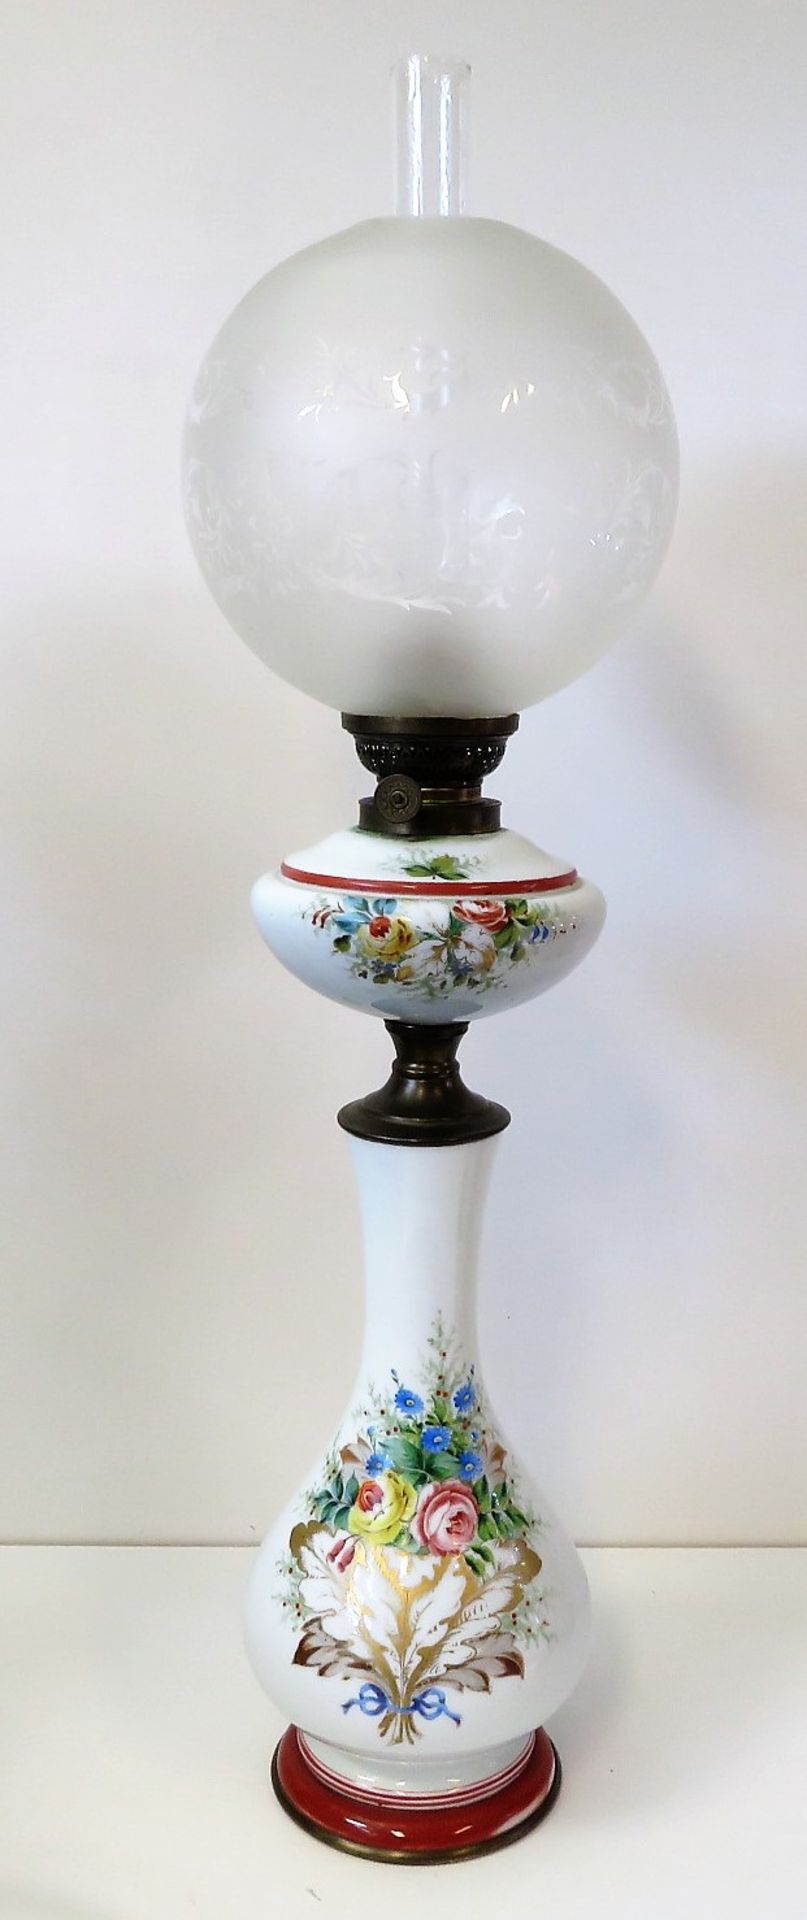 Petroleumlampe, Biedermeier, 19. Jahrhundert, Weißporzellan mit polychromer Blüten- und Goldmalerei